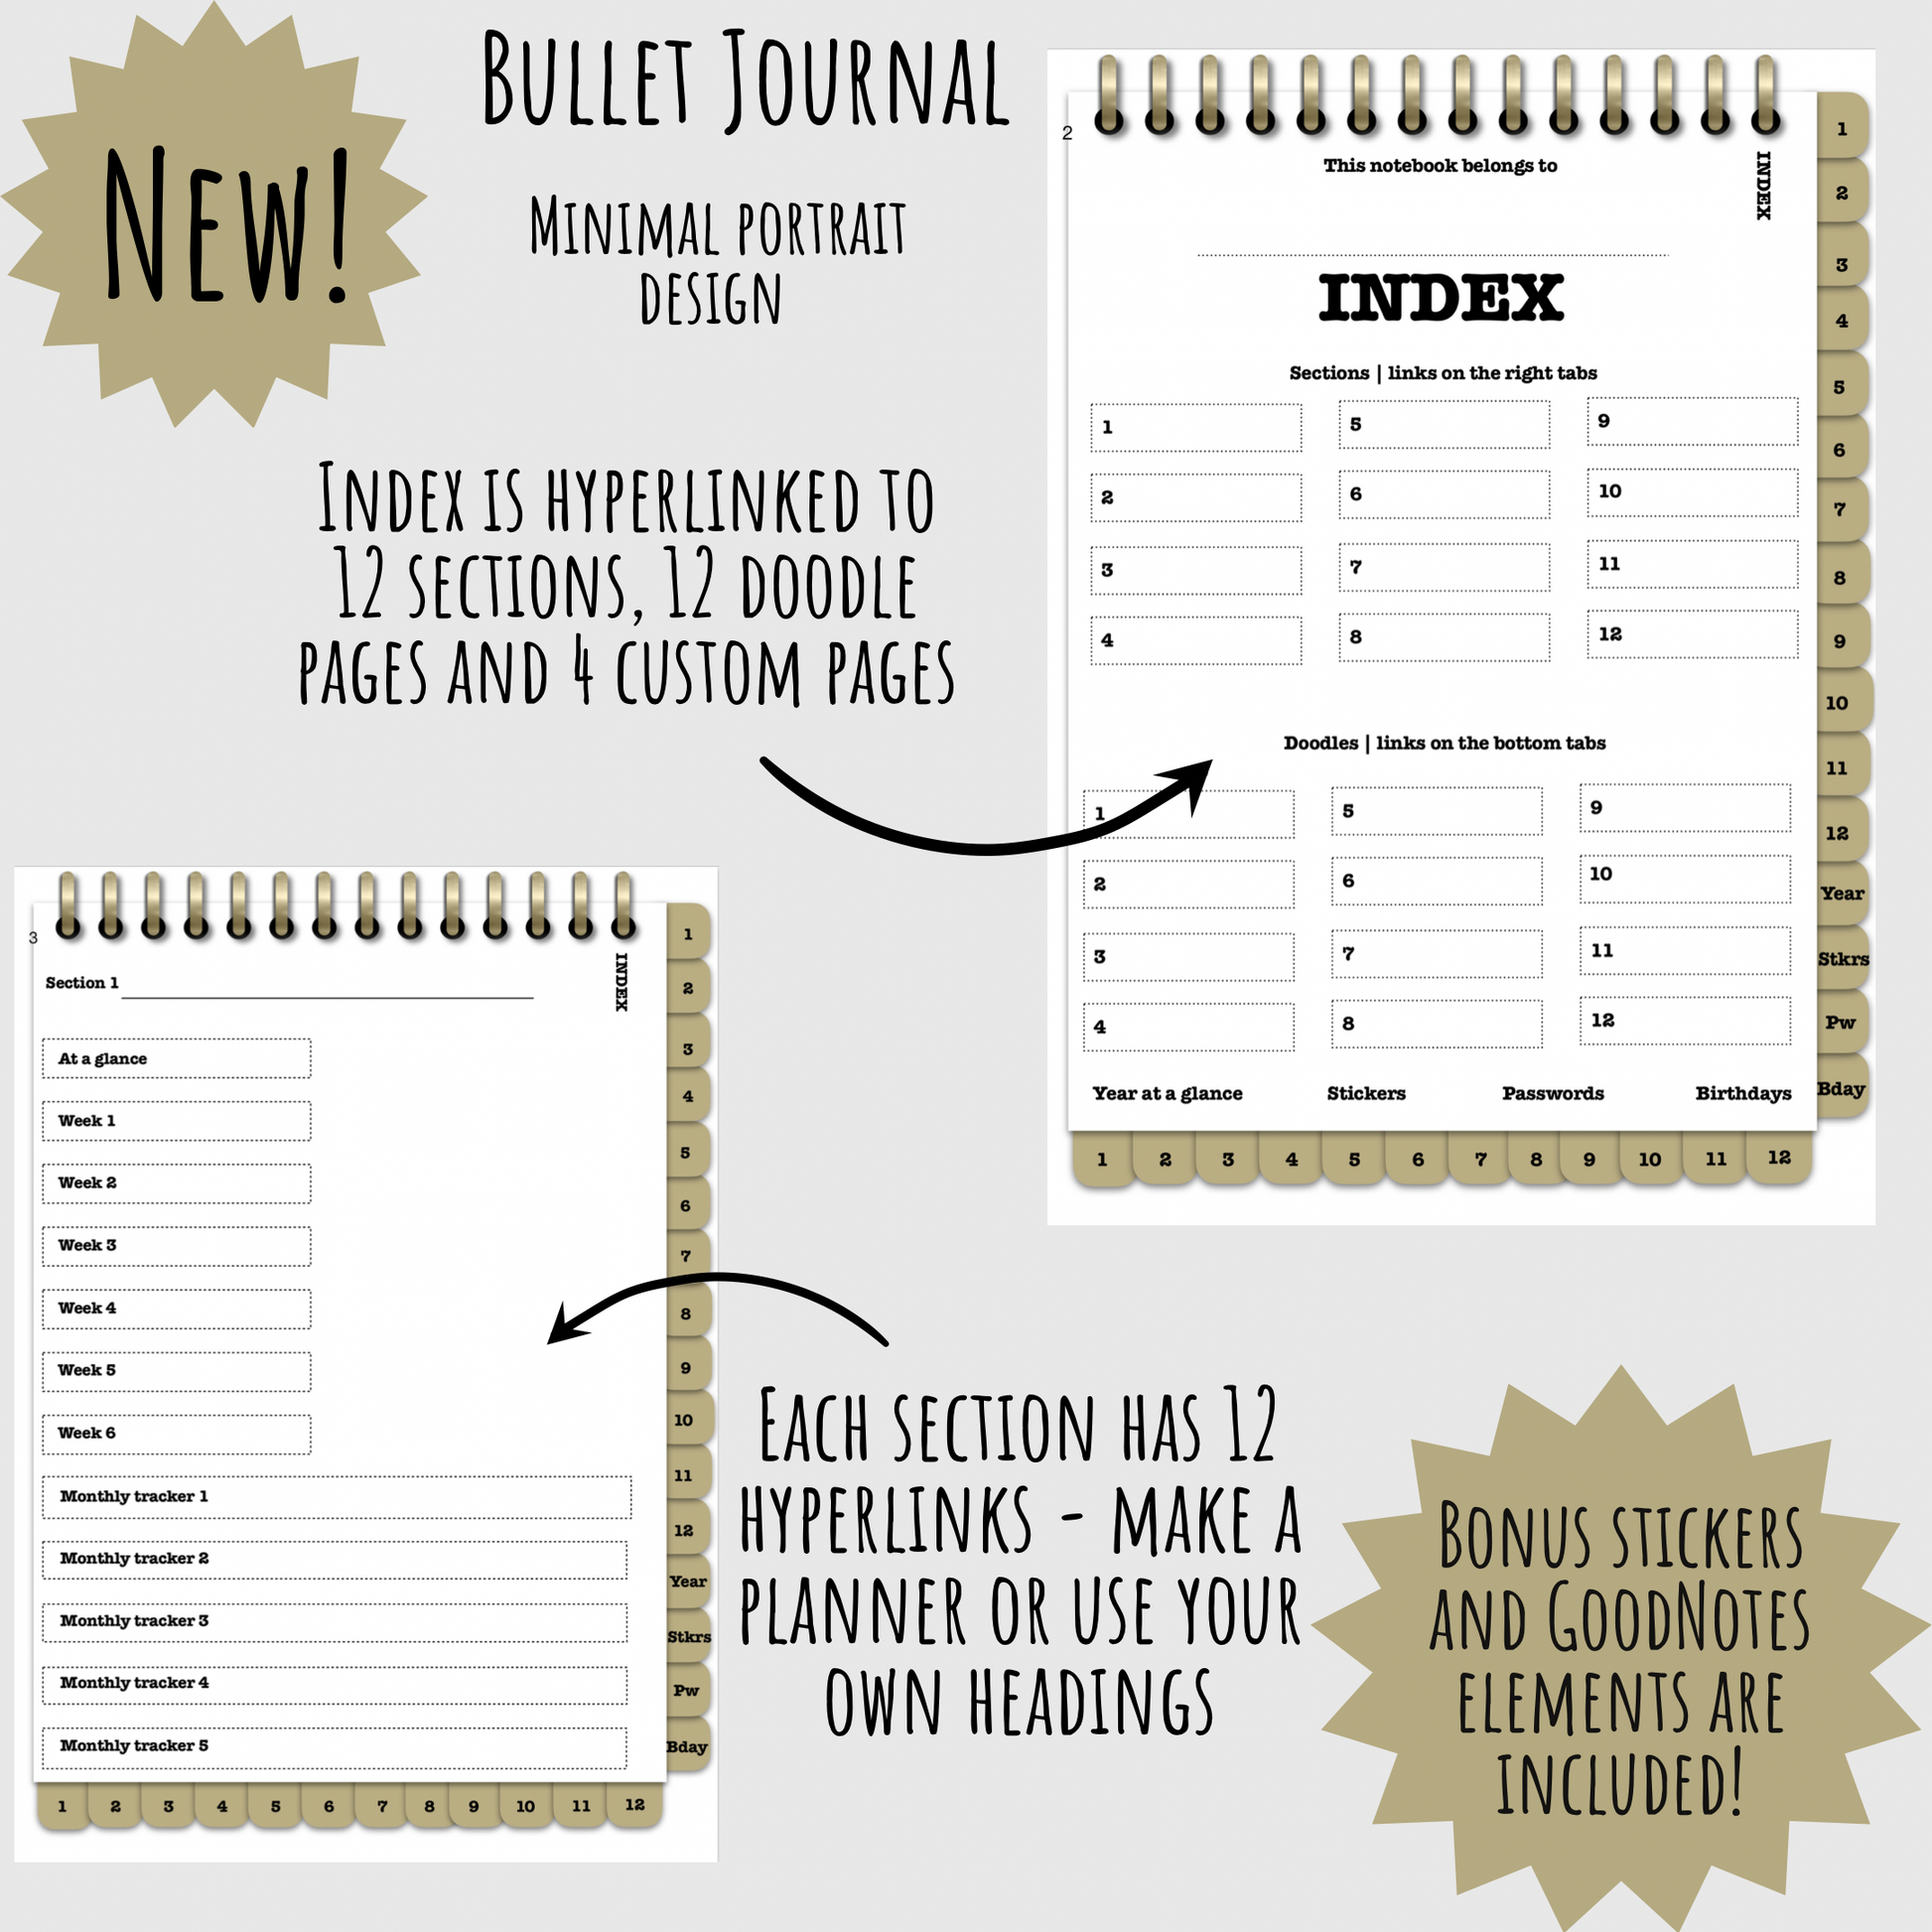 How to design a digital bullet journal